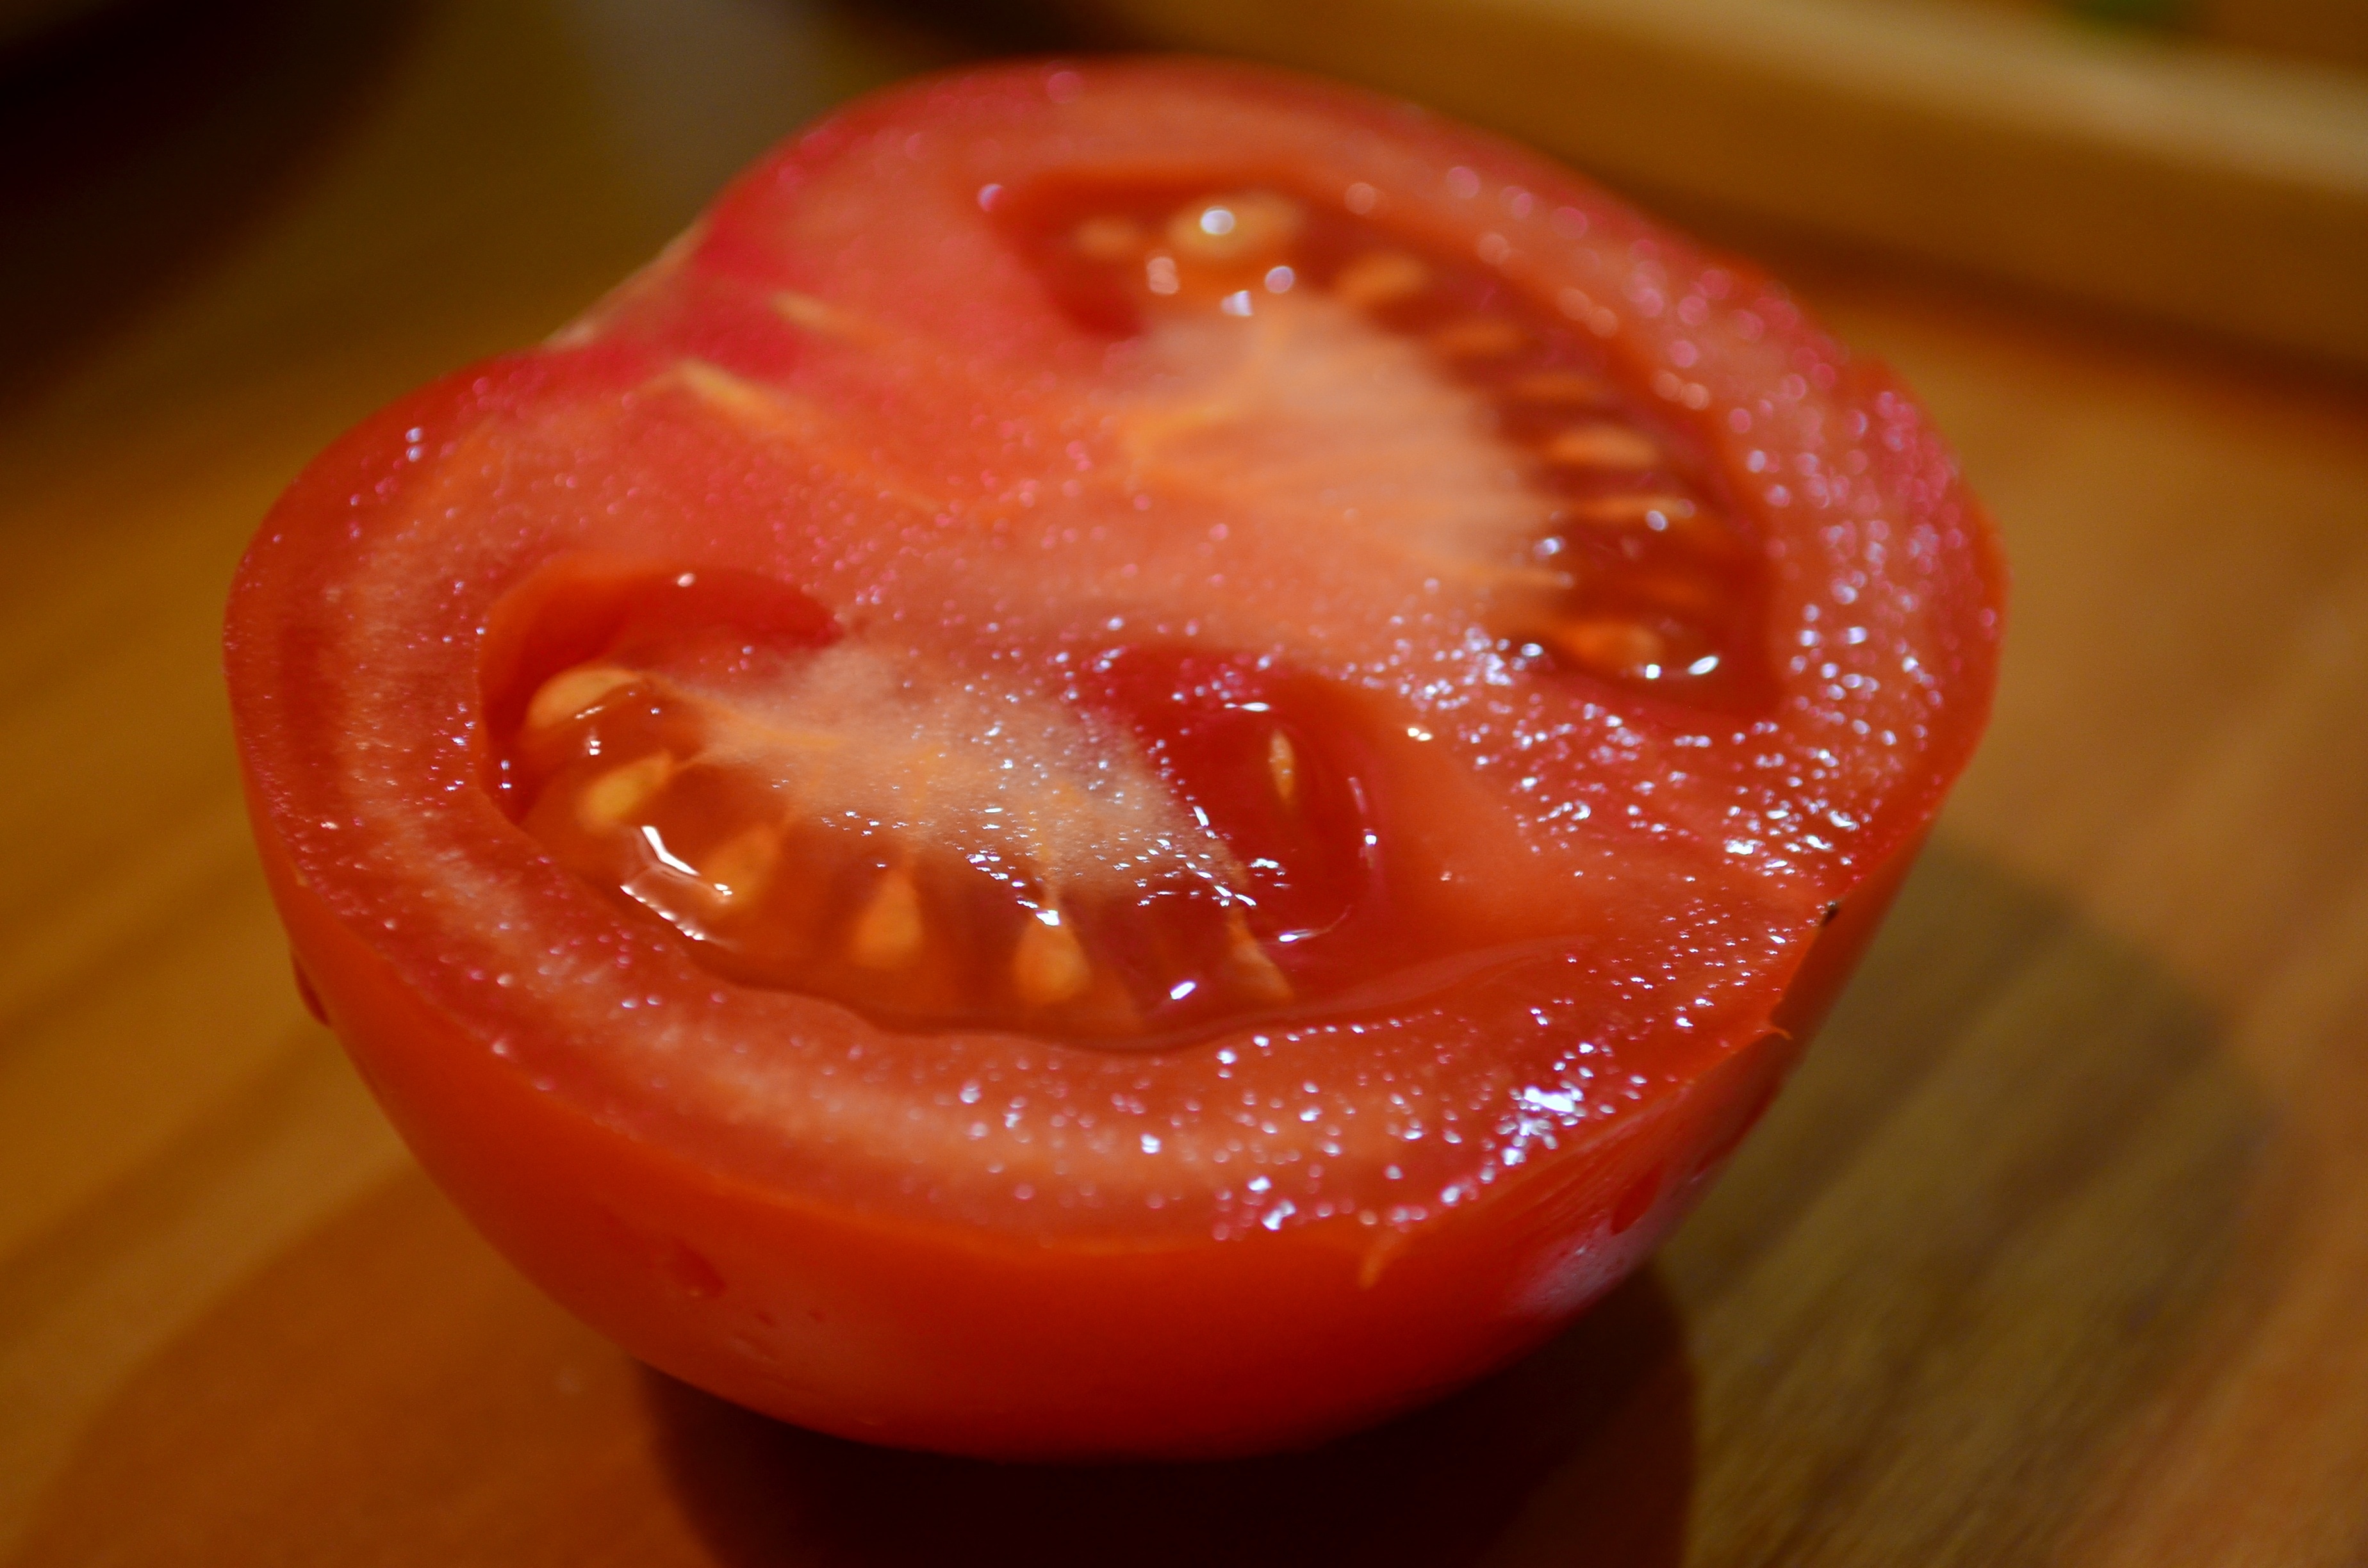 sliced red tomato